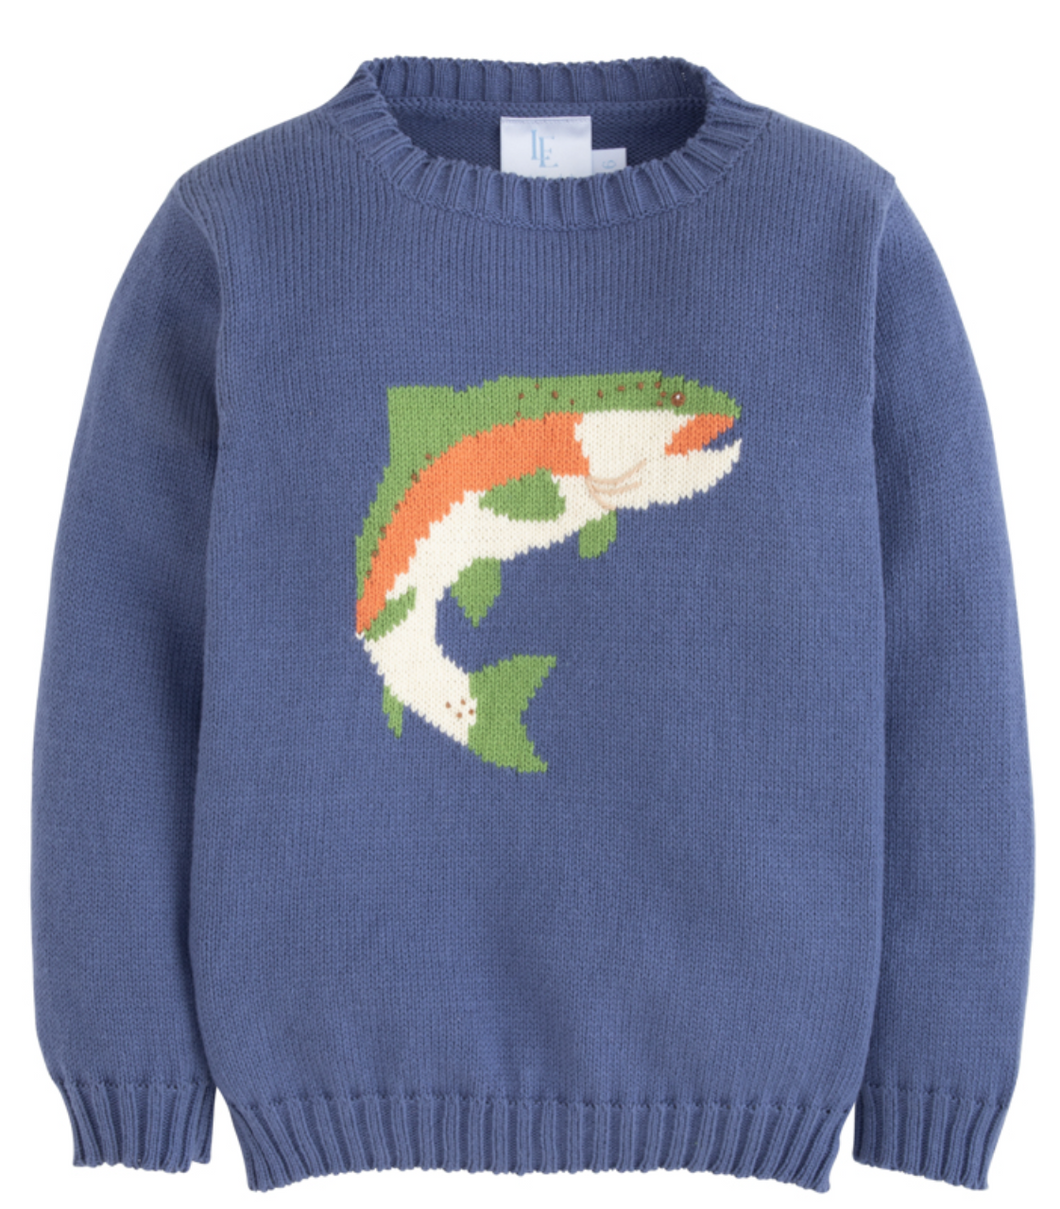 Intarsia Sweater- Trout